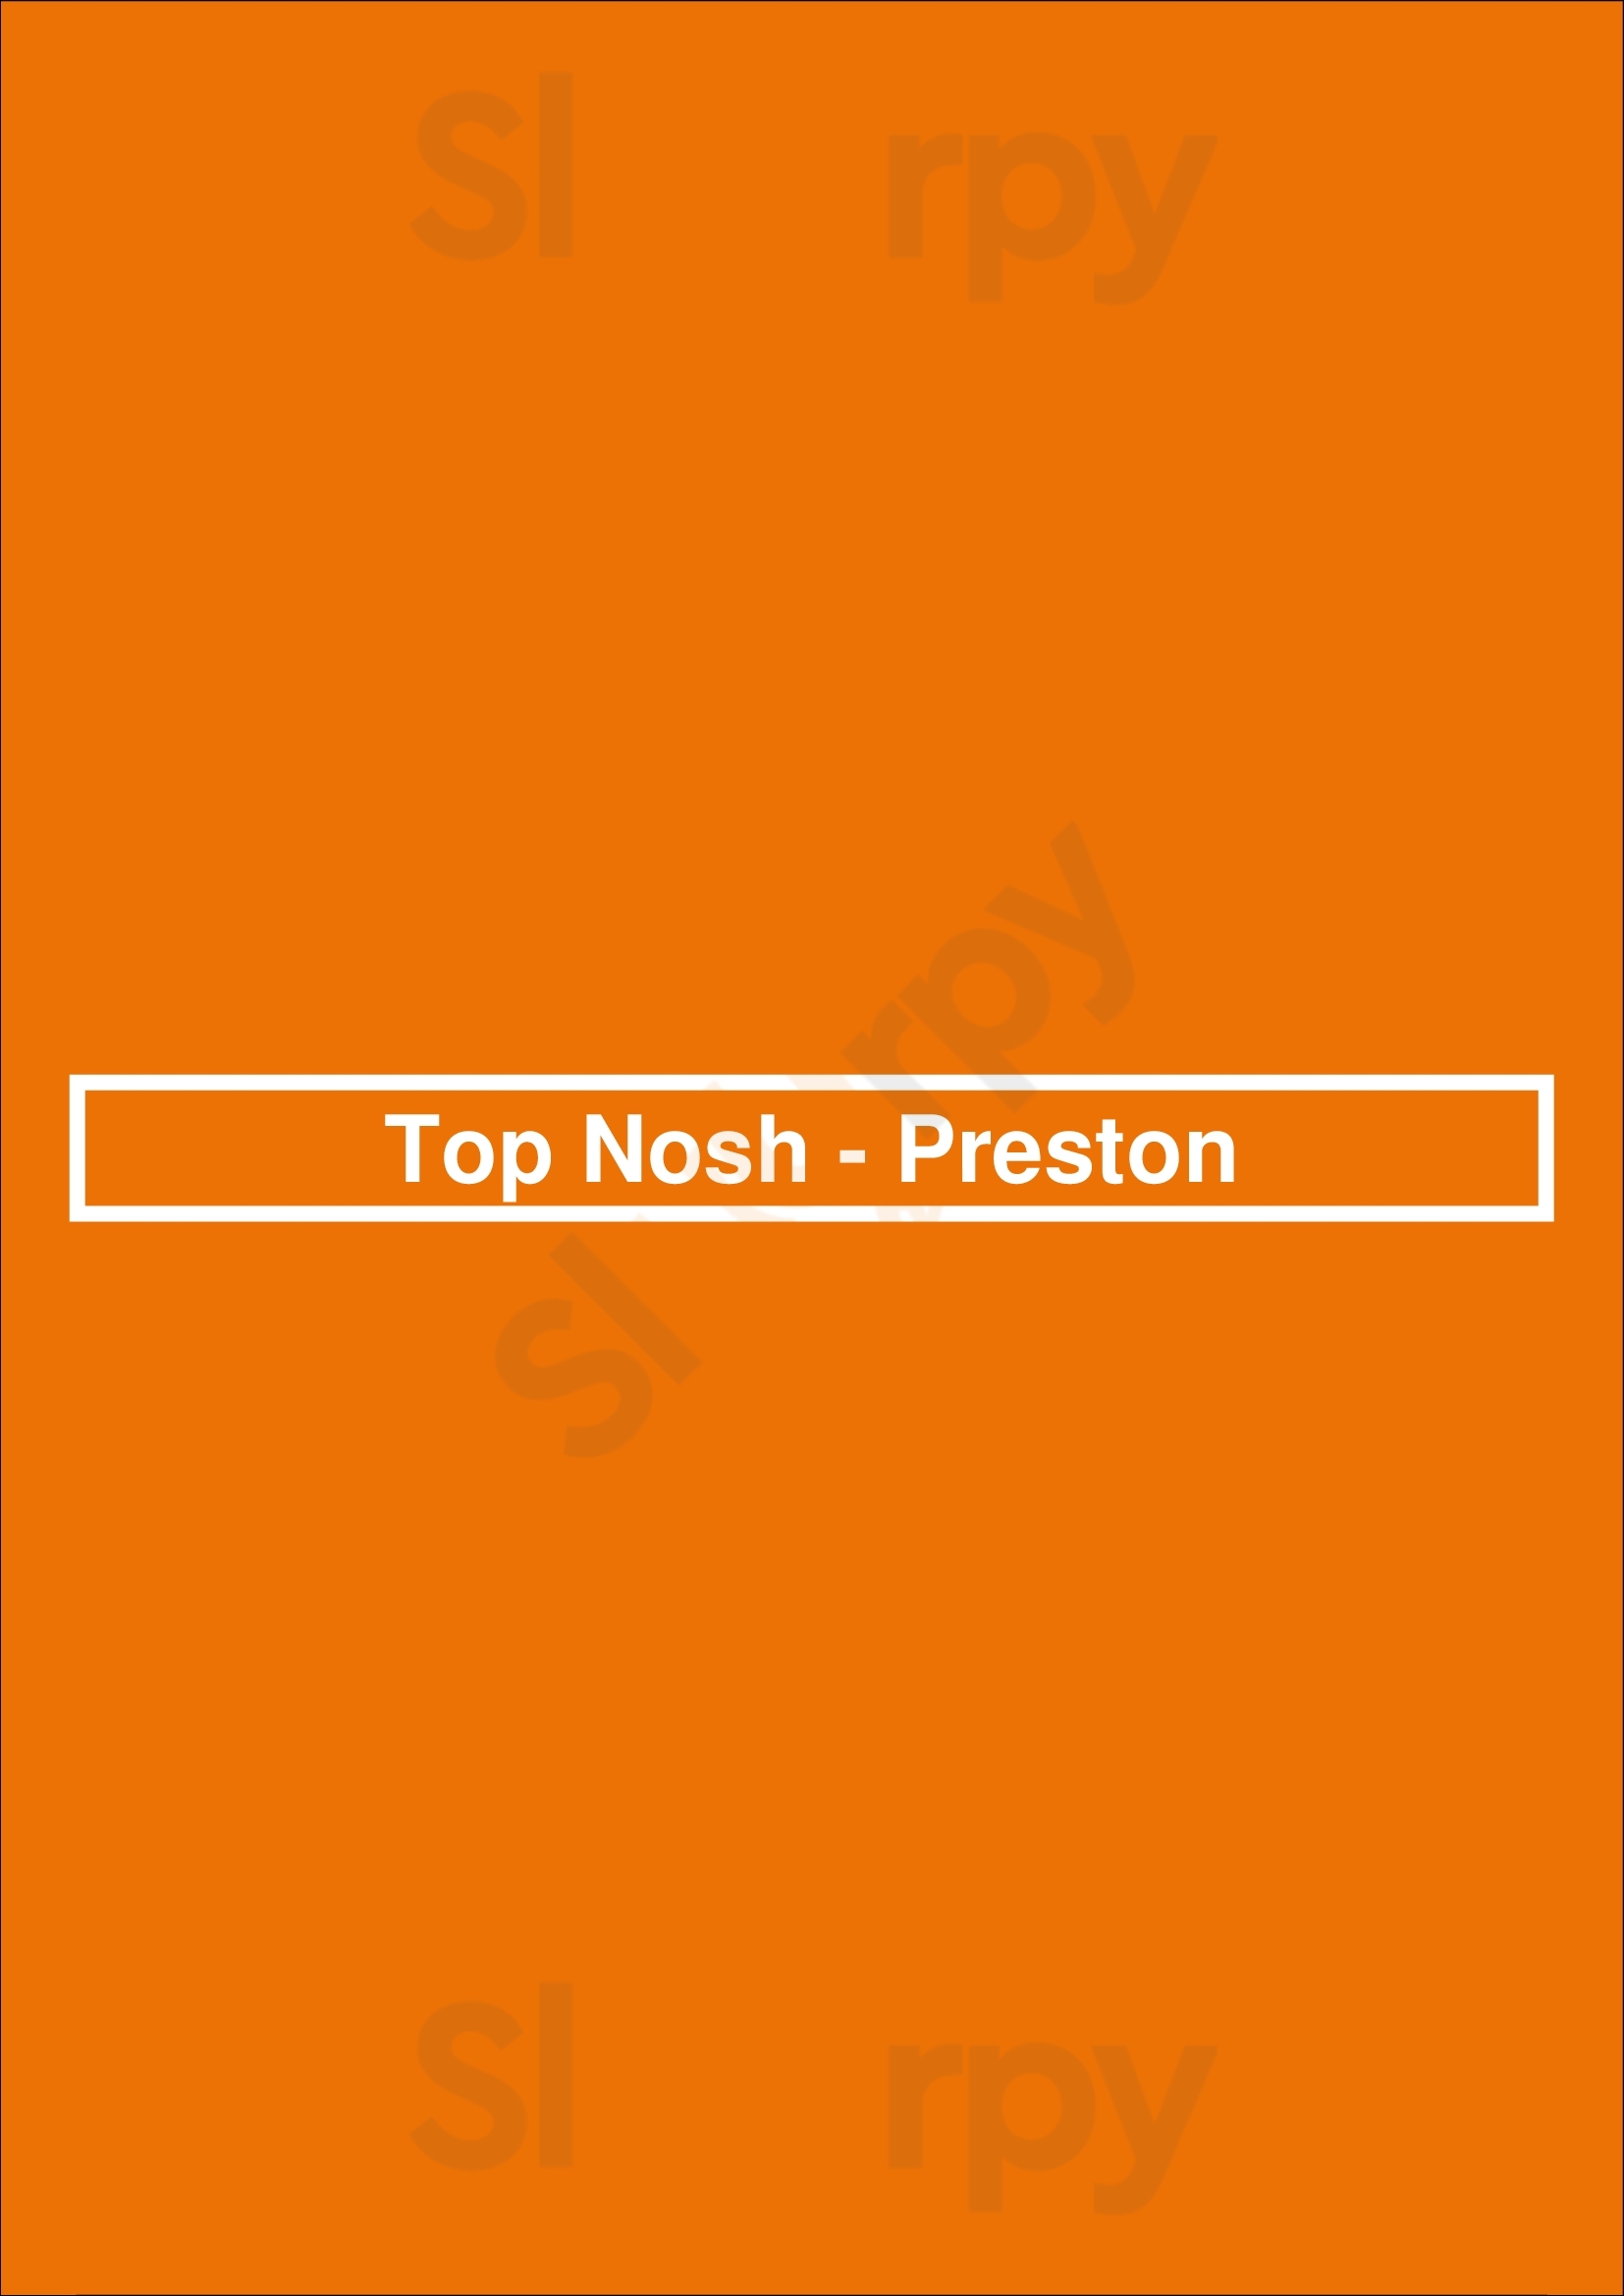 Top Nosh - Preston Preston Menu - 1